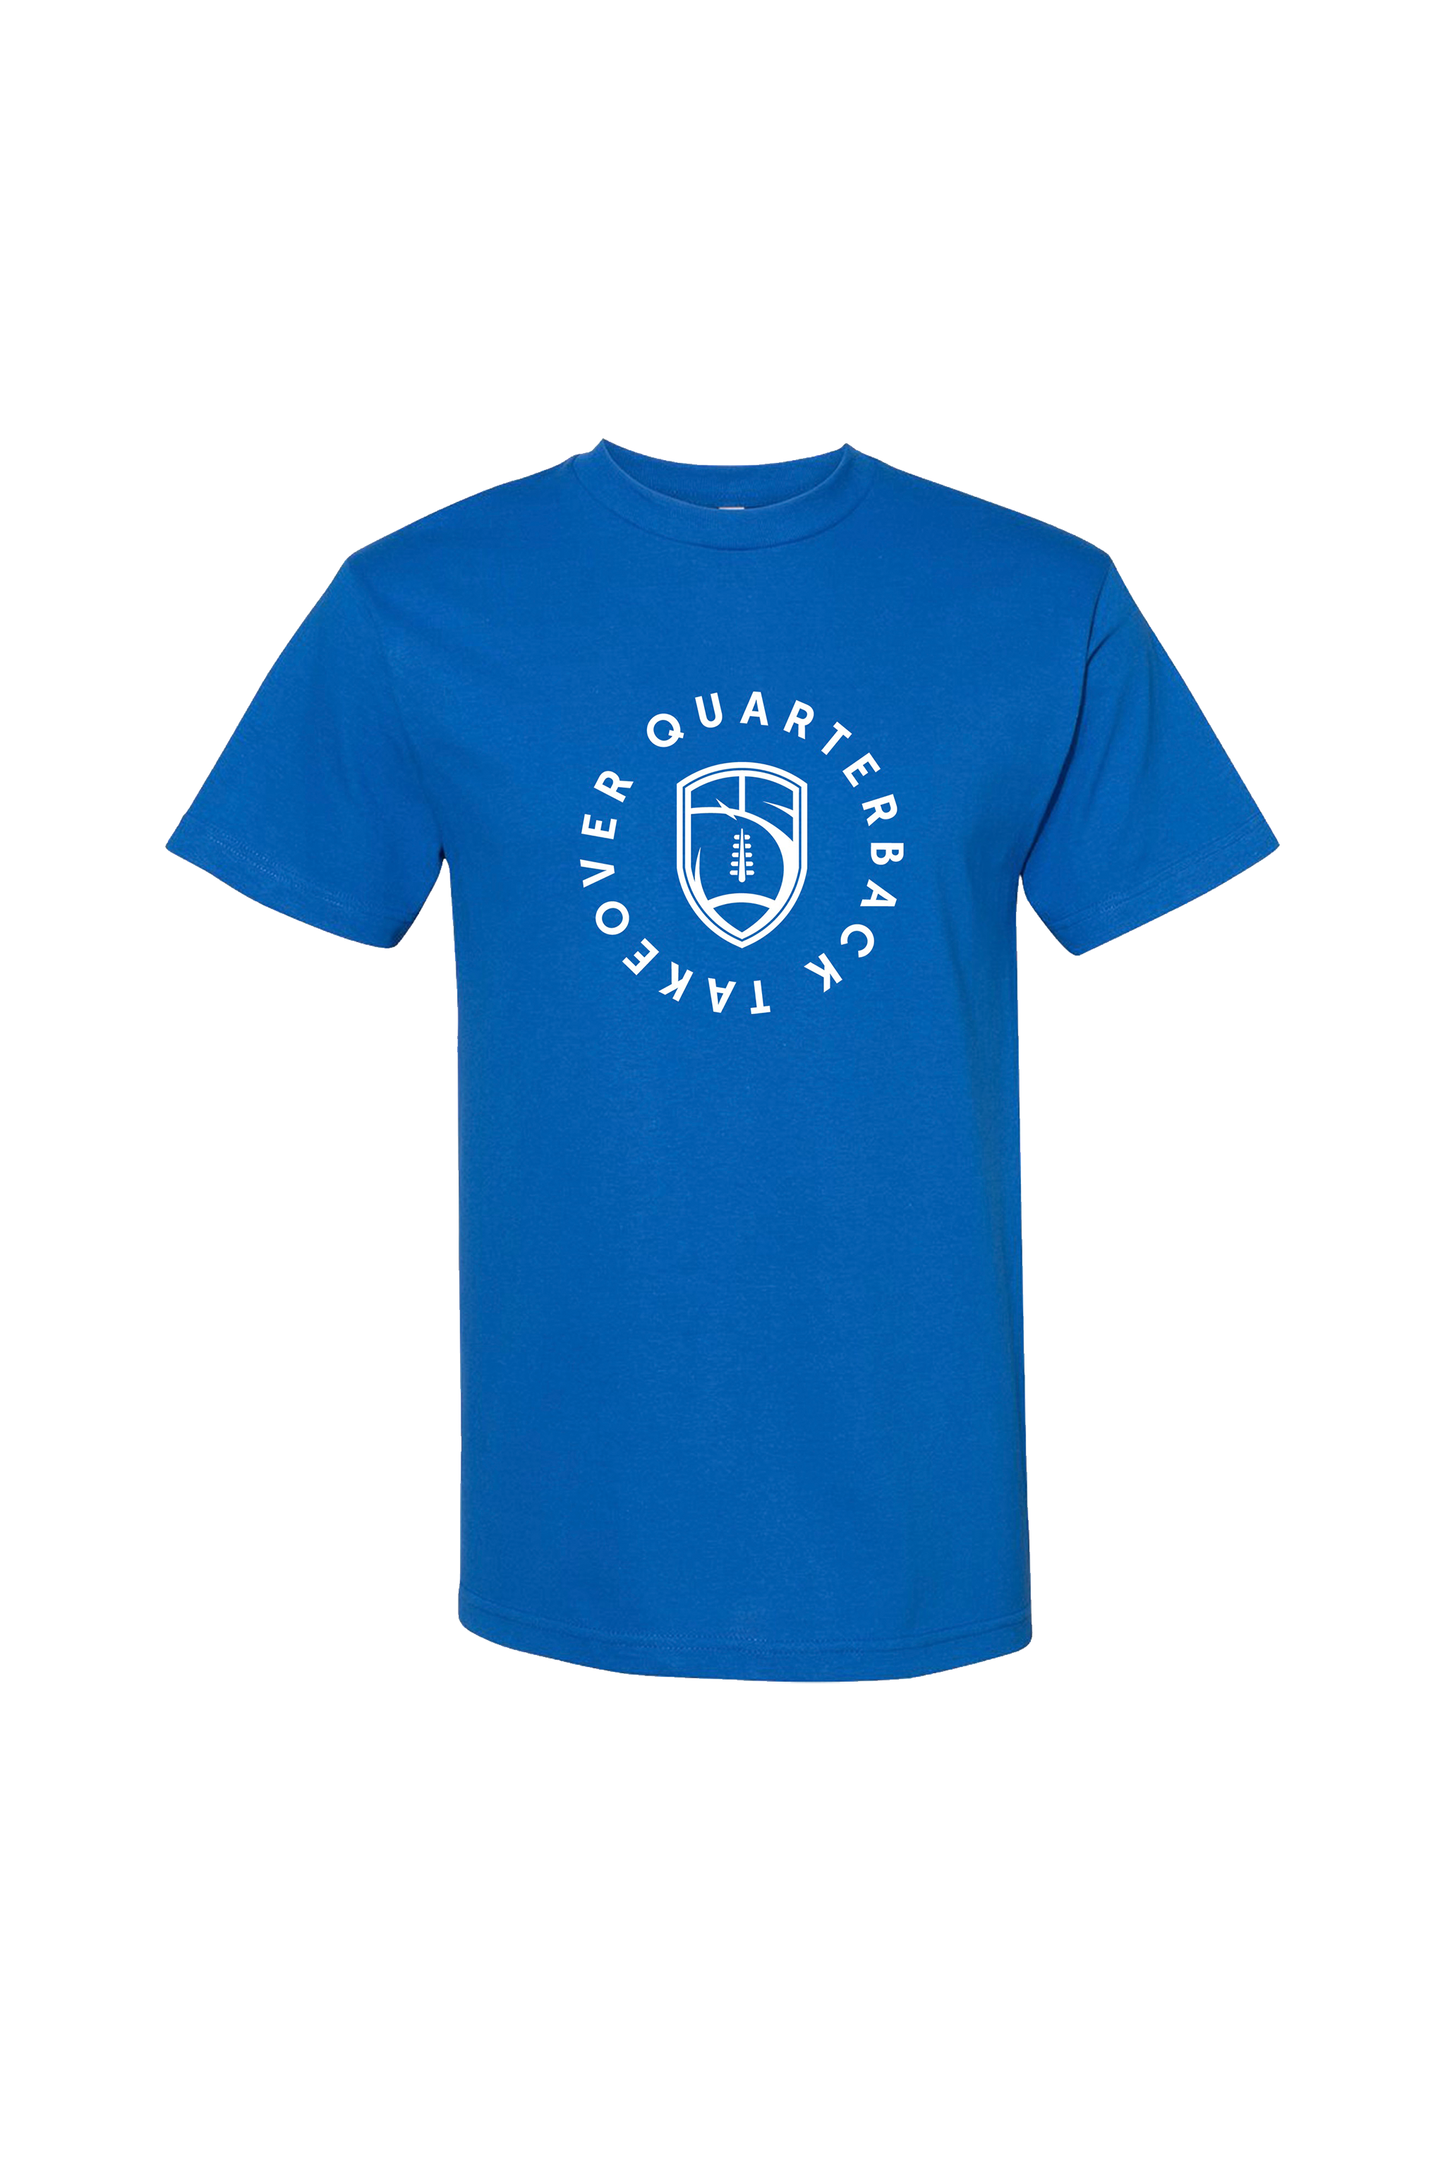 QBT Original Shirt